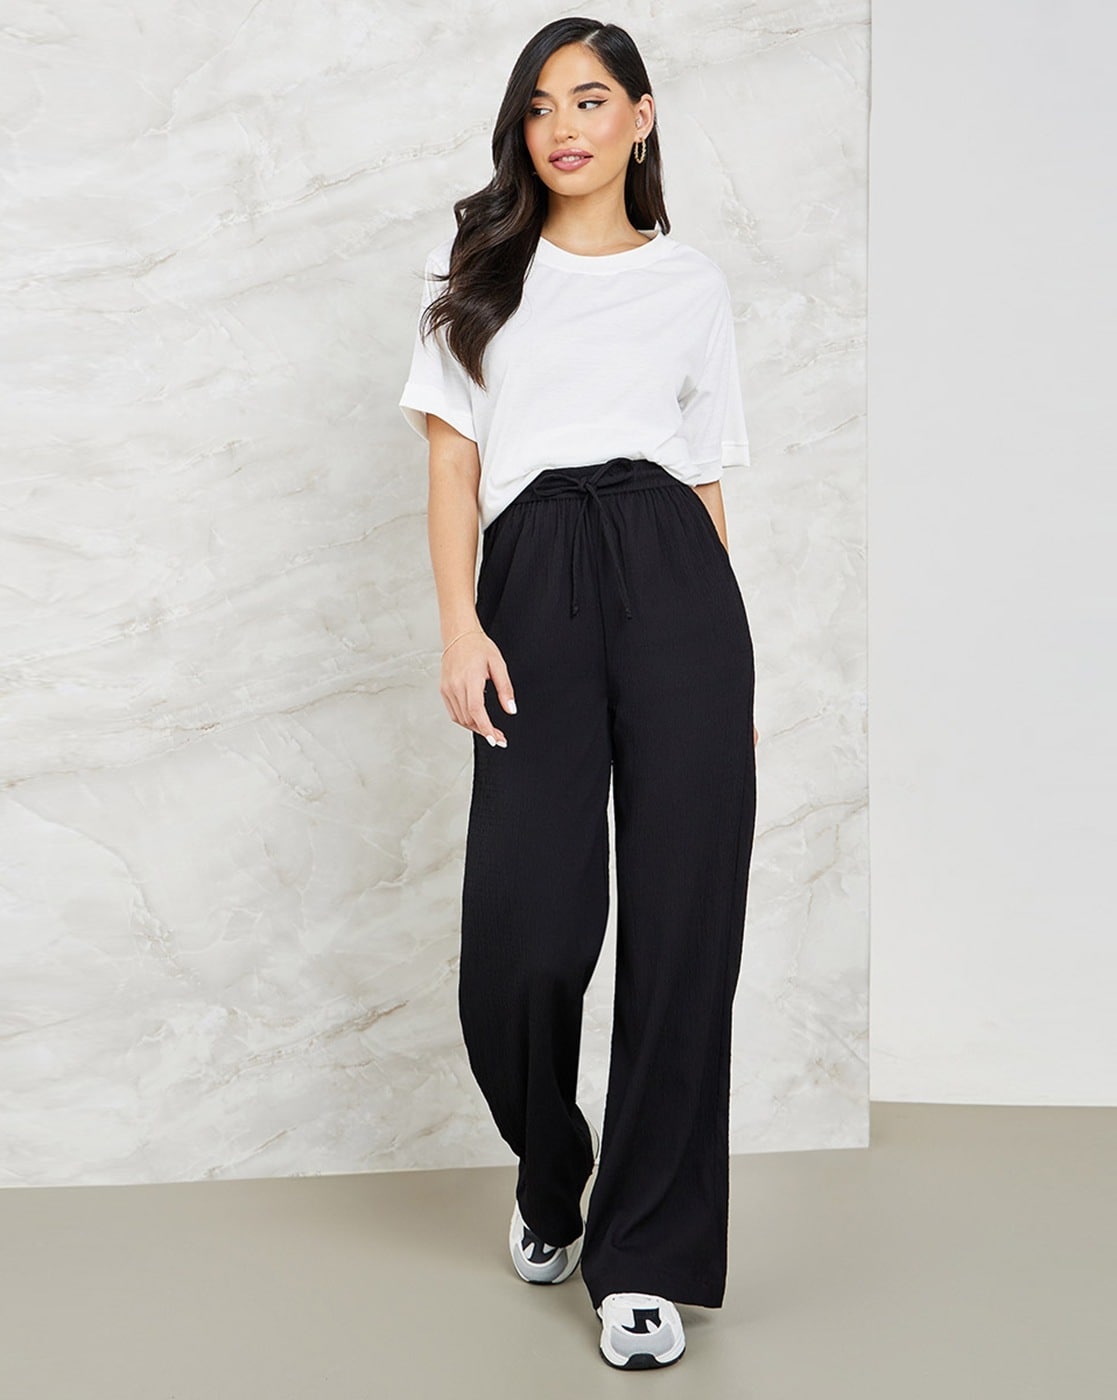 Buy Black Trousers & Pants for Women by Styli Online